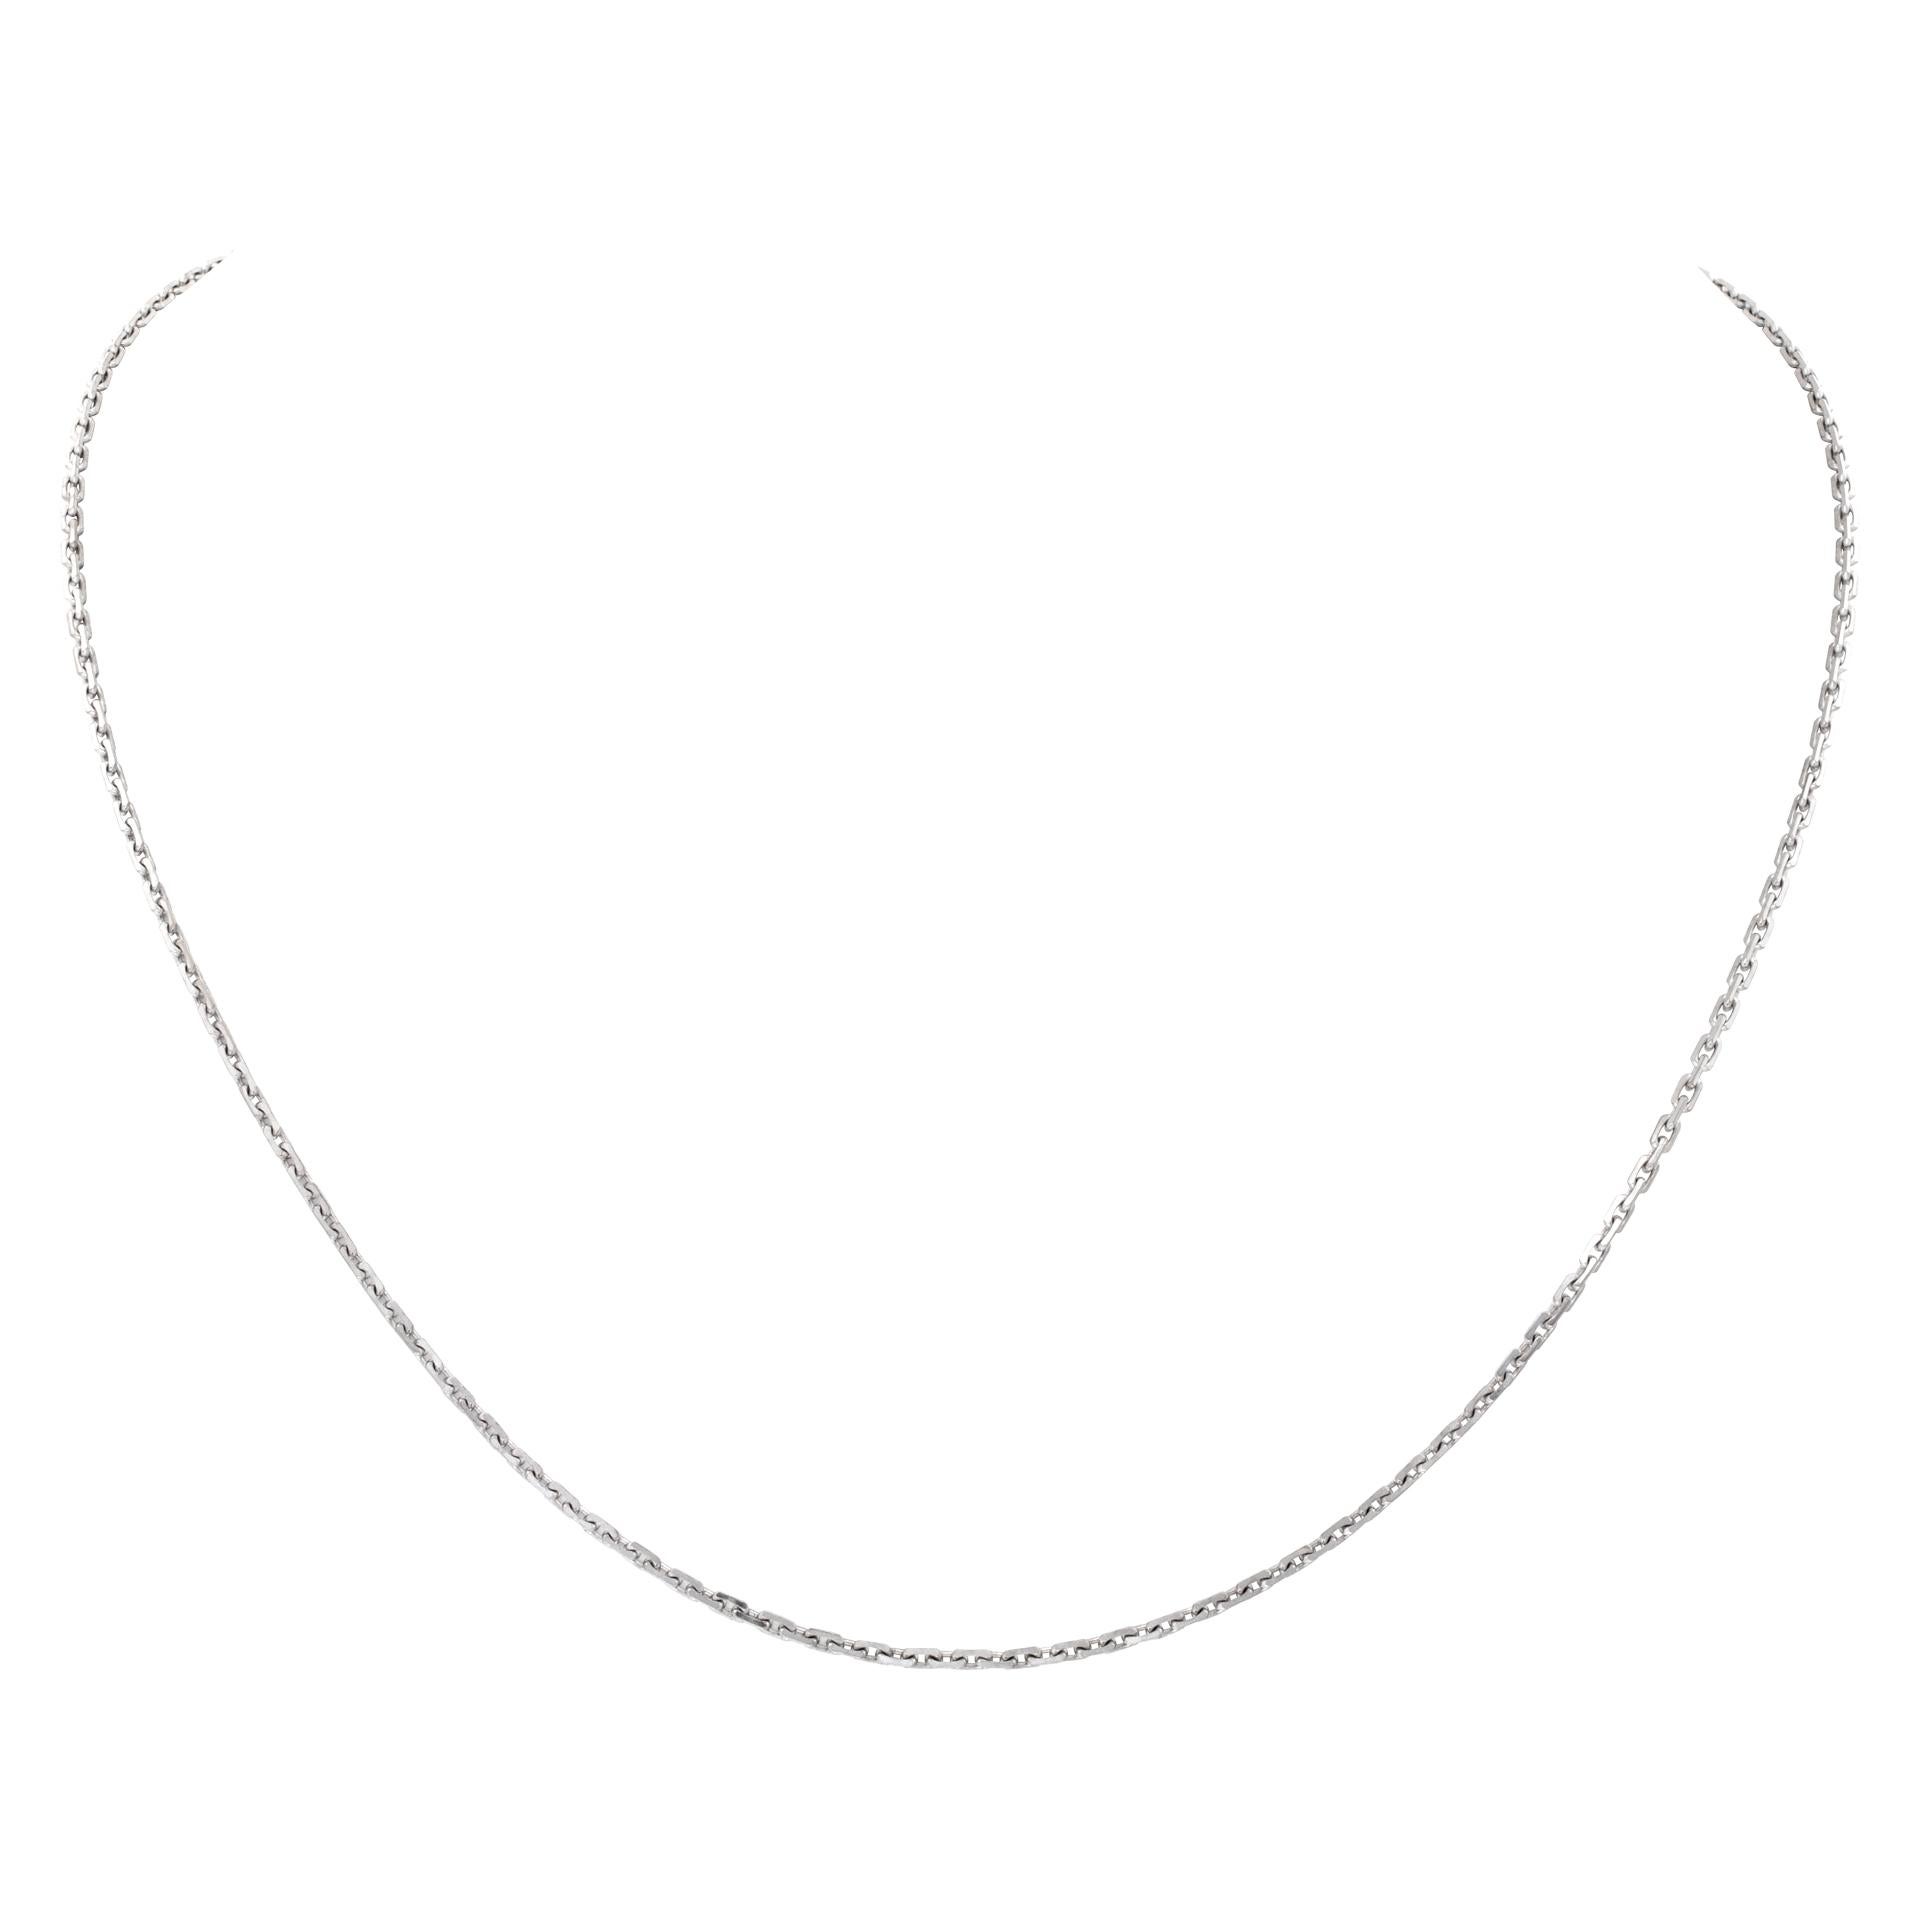 White gold thin link chain